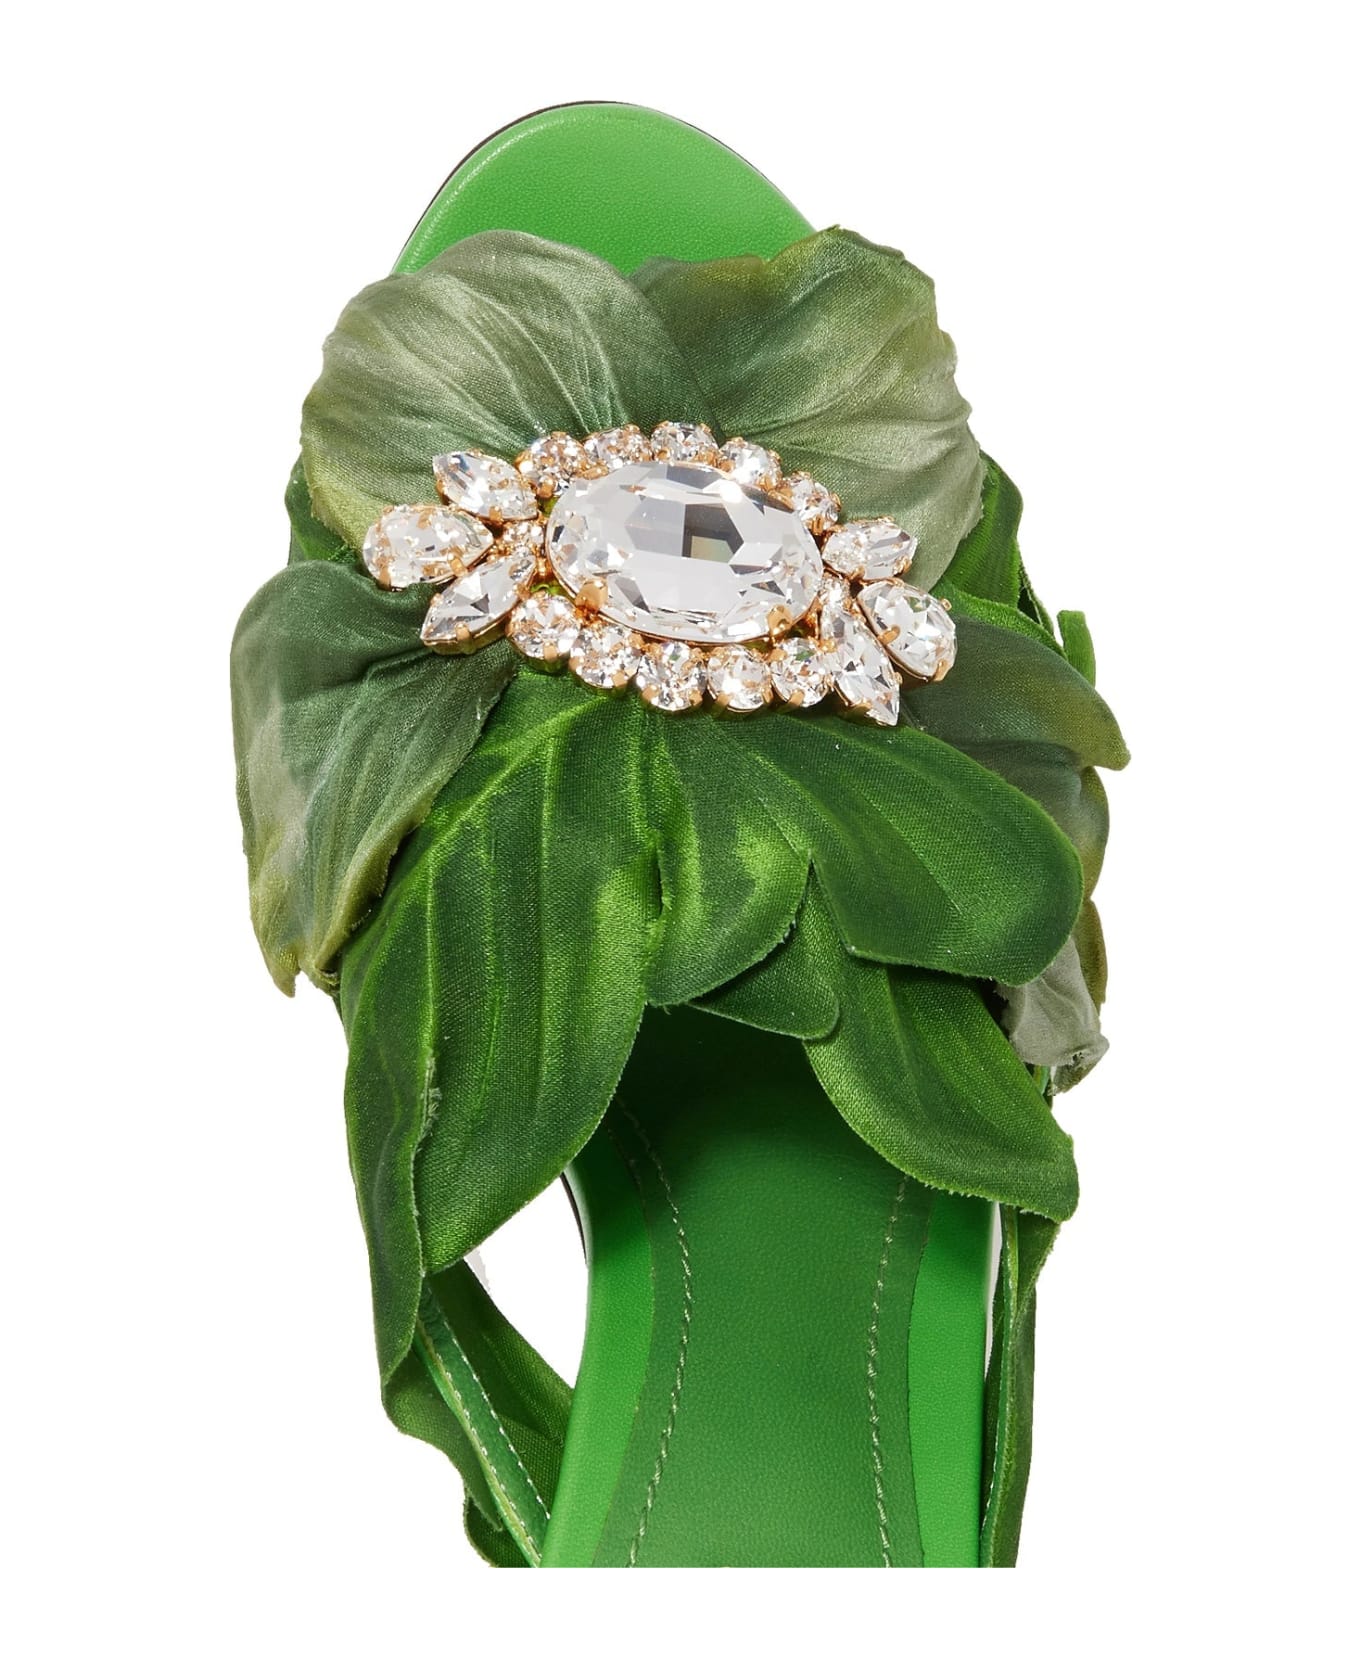 Dolce & Gabbana Keira Jungle Leaf Satin Mules - Green サンダル